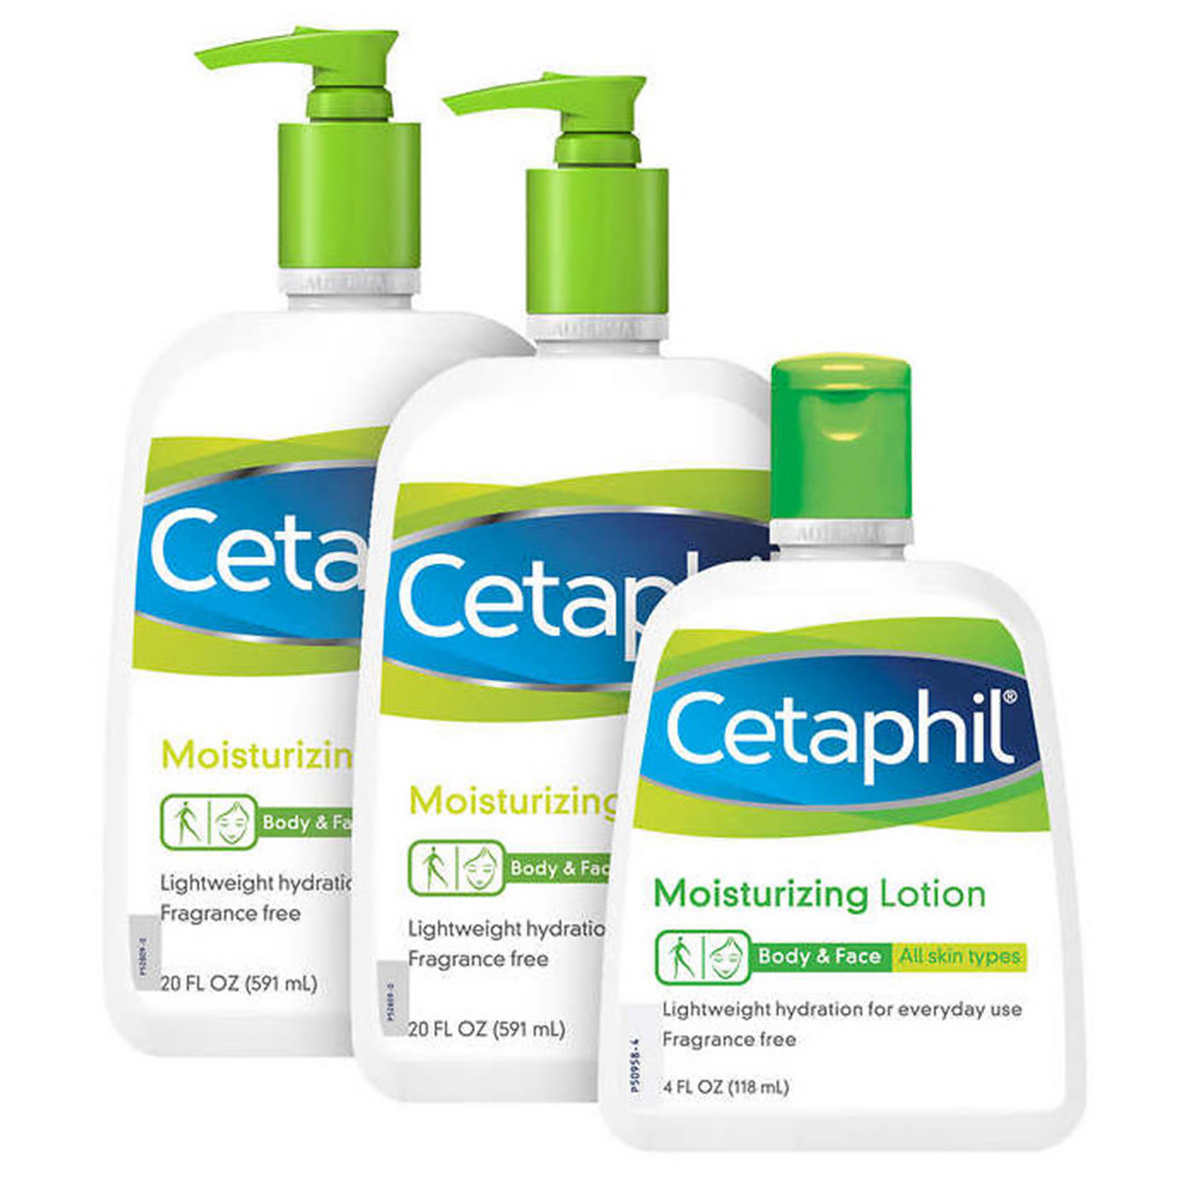 Cetaphil Moisture Lotion 3-pack